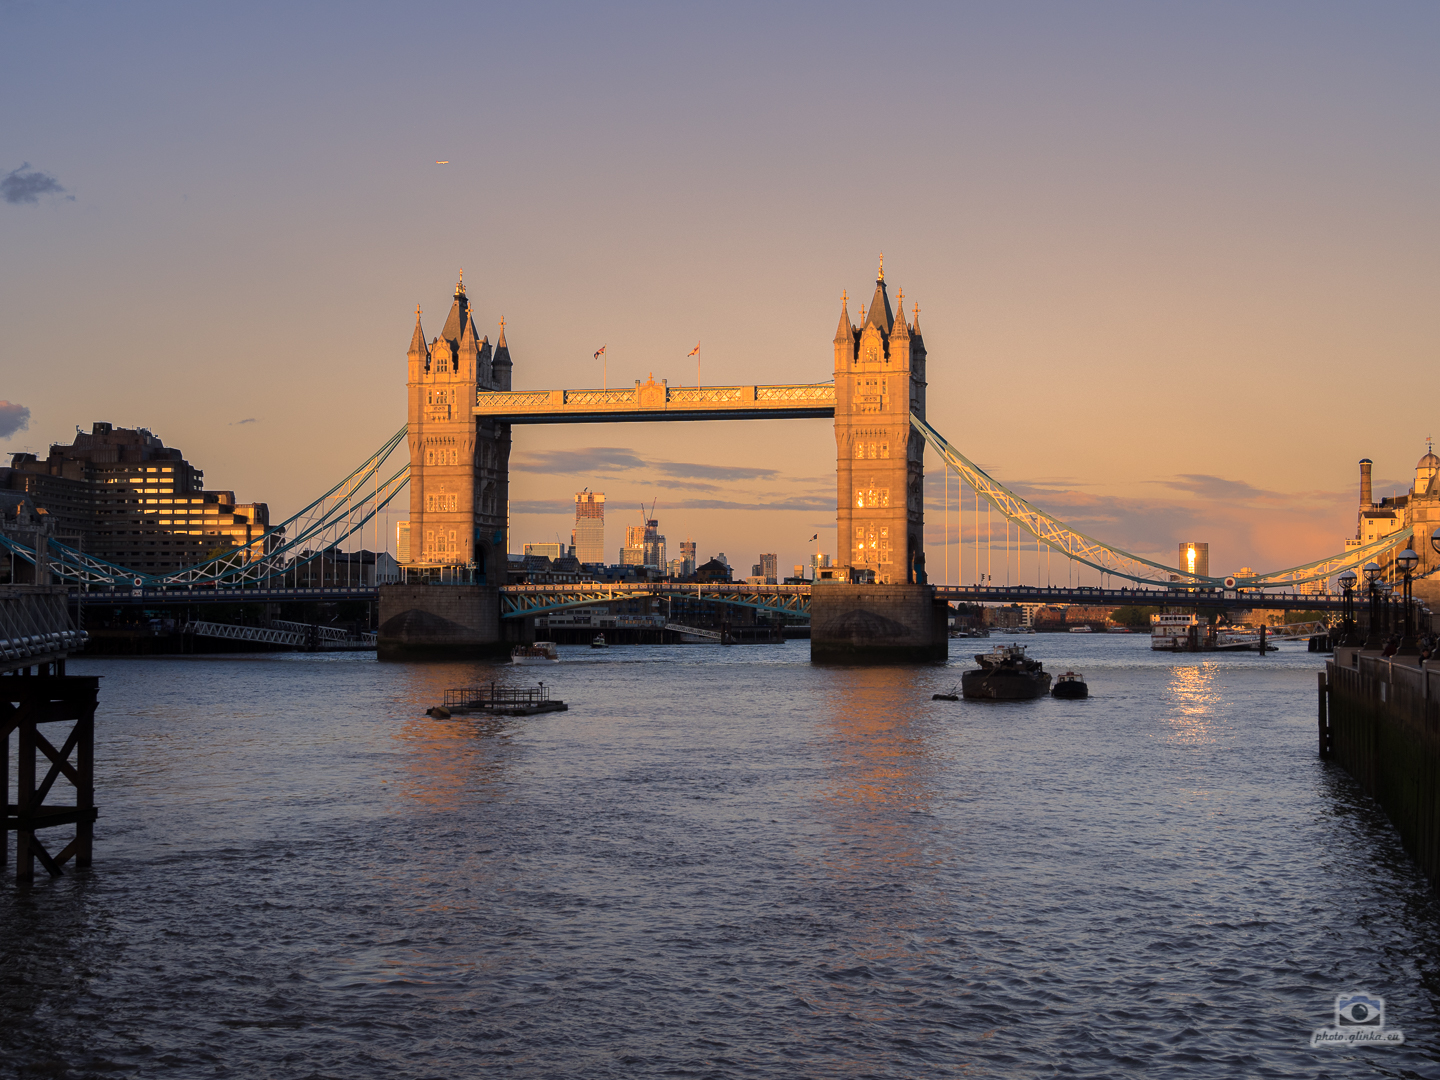 Sunset at Tower Bridge